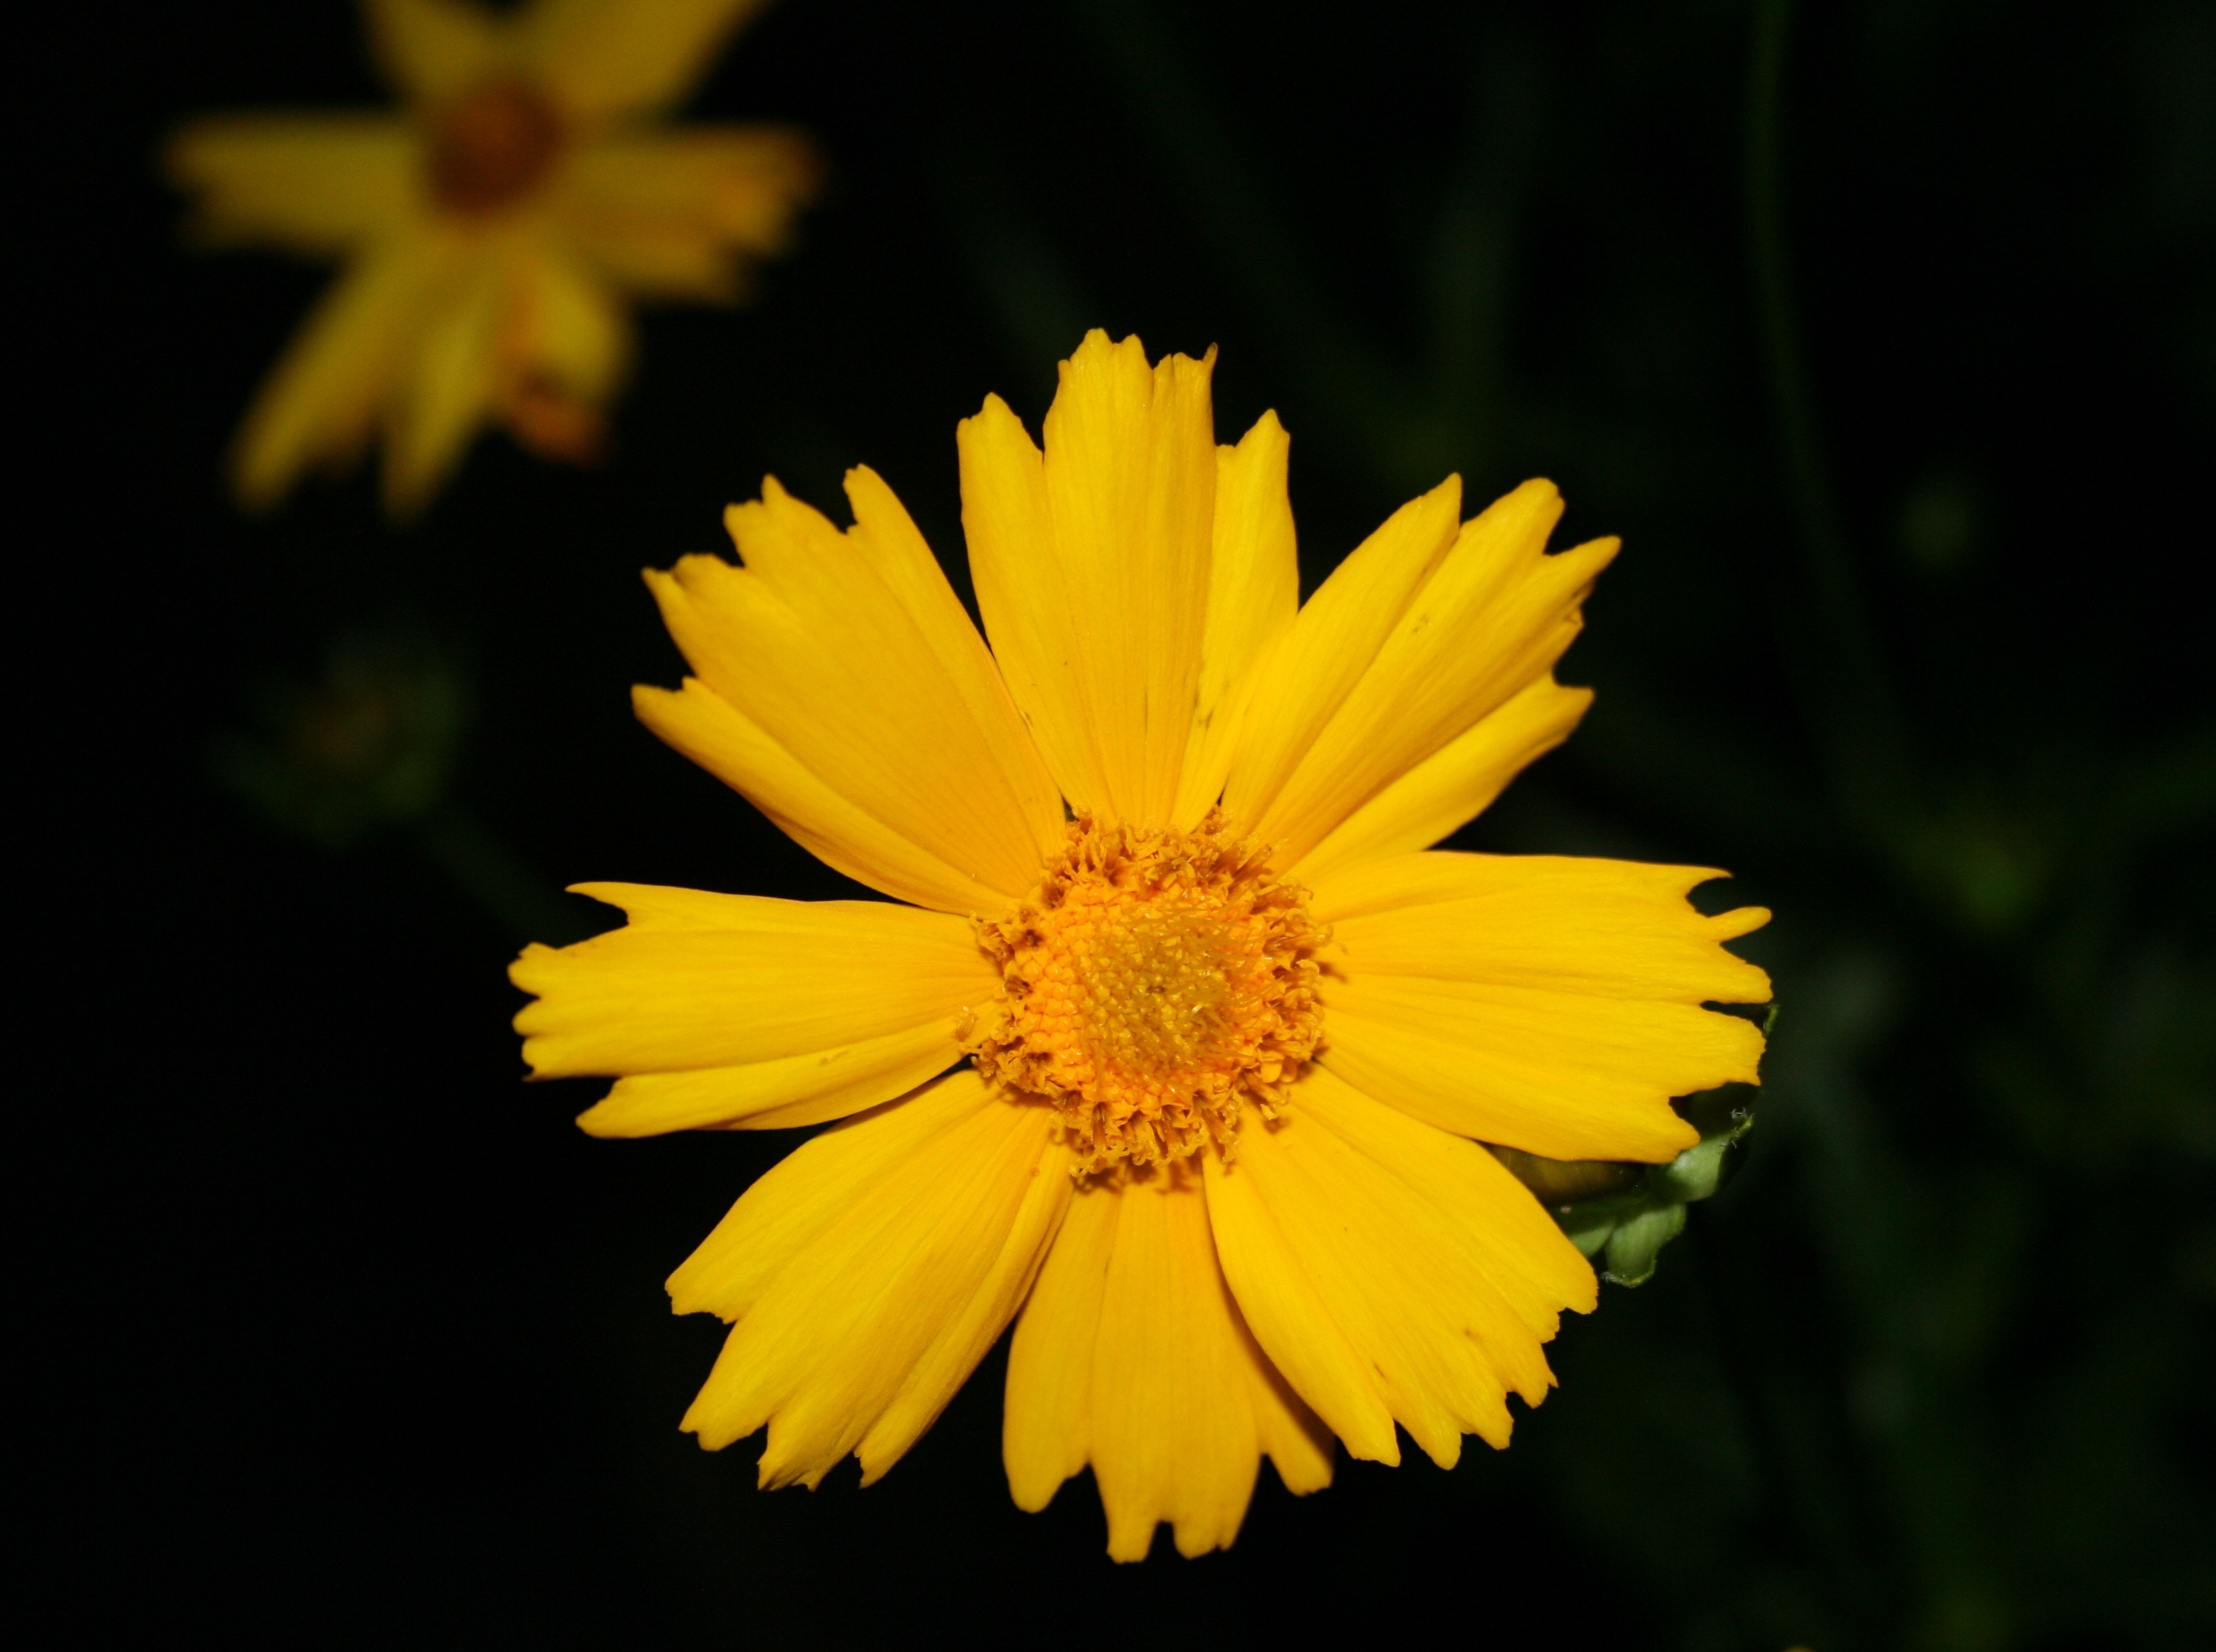 yellow 10 petaled flower